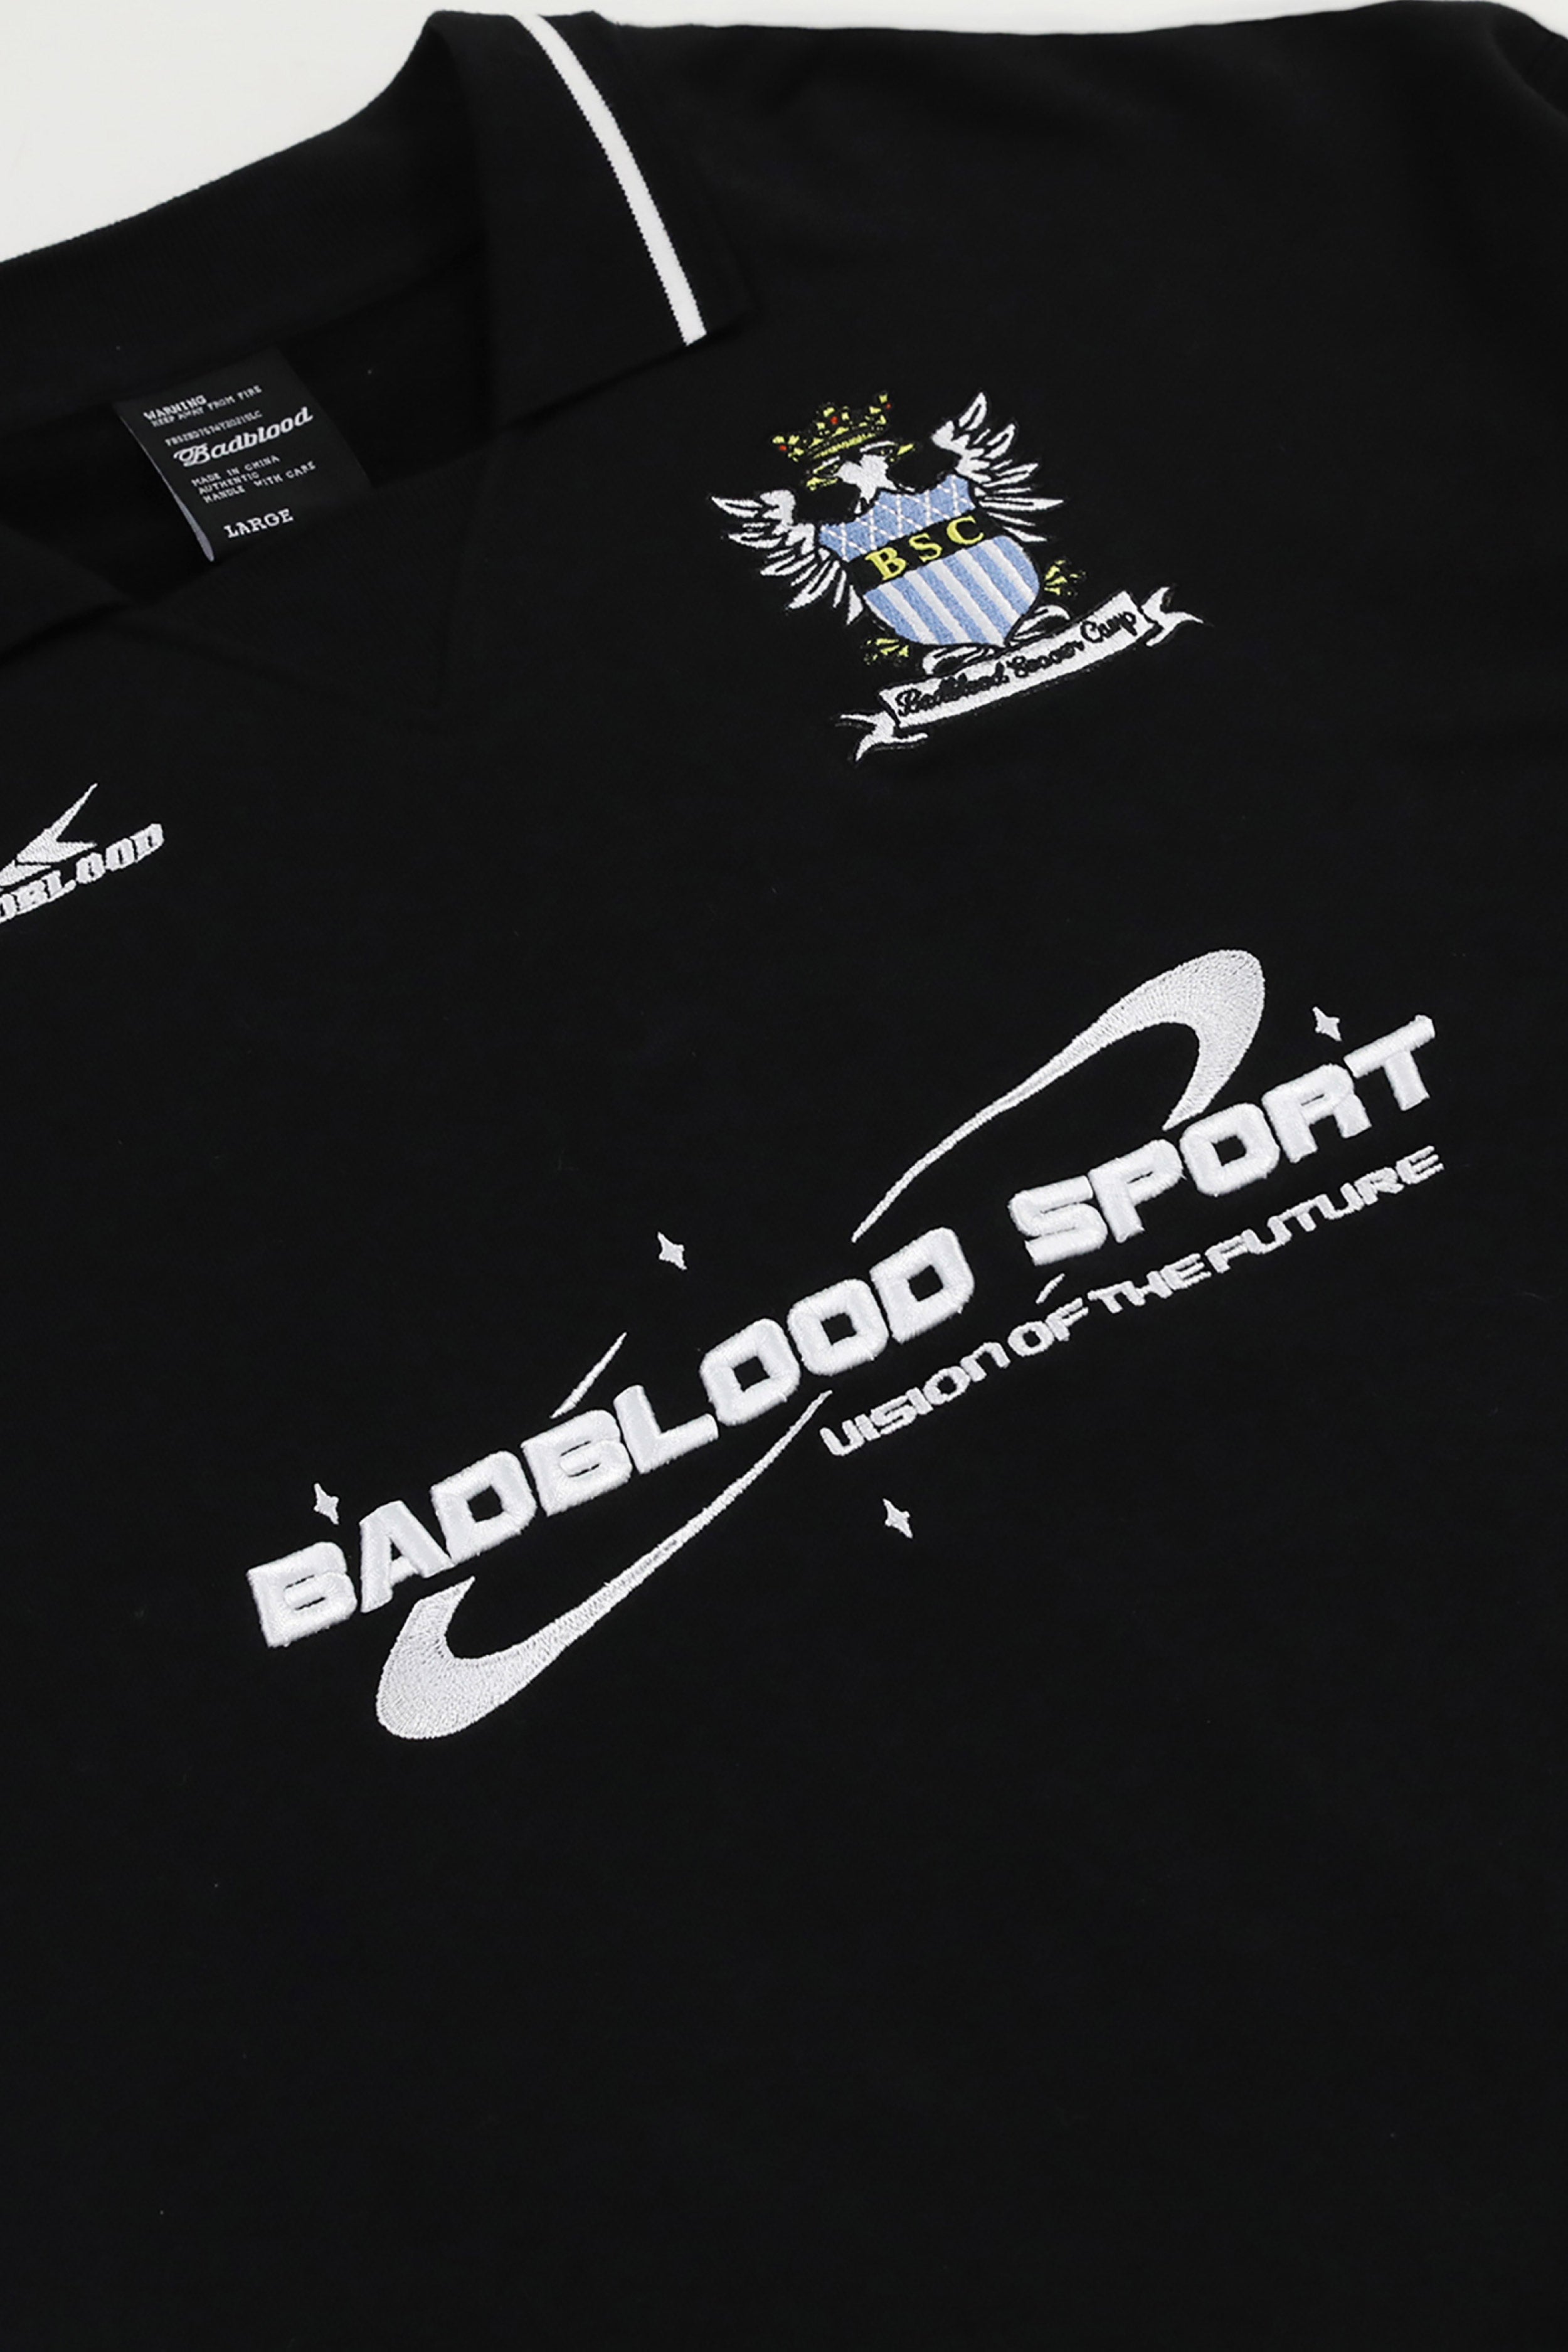 Badblood BSC Soccer Camp Panelled Sweatshirt Black